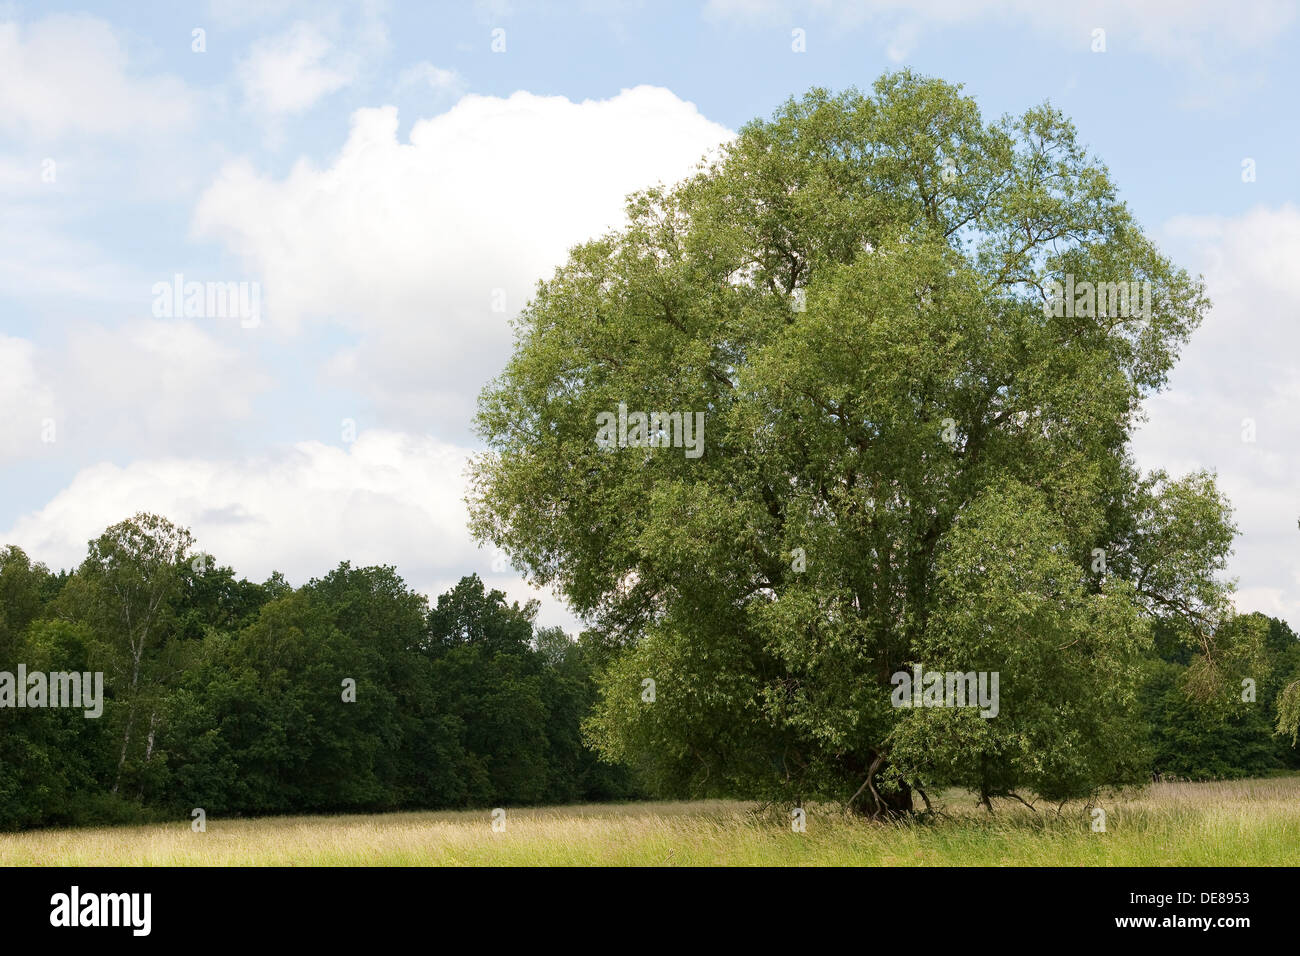 Crack Willow, Bruch-Weide, Bruchweide, Knack-Weide, Knackweide, Weide, Salix fragalis Stock Photo